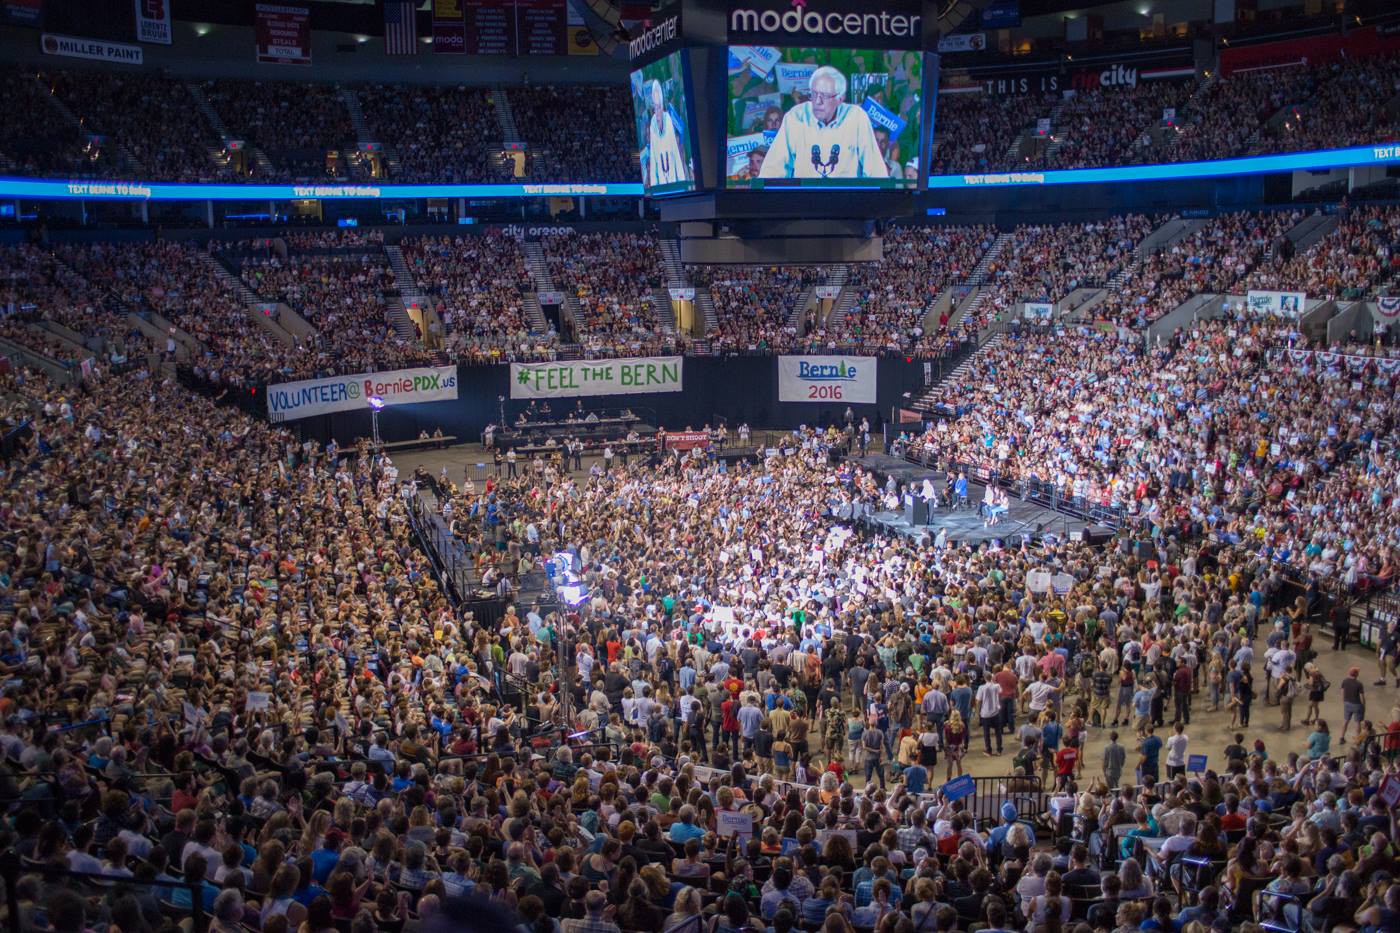 Bernie crowd in Portland, OR